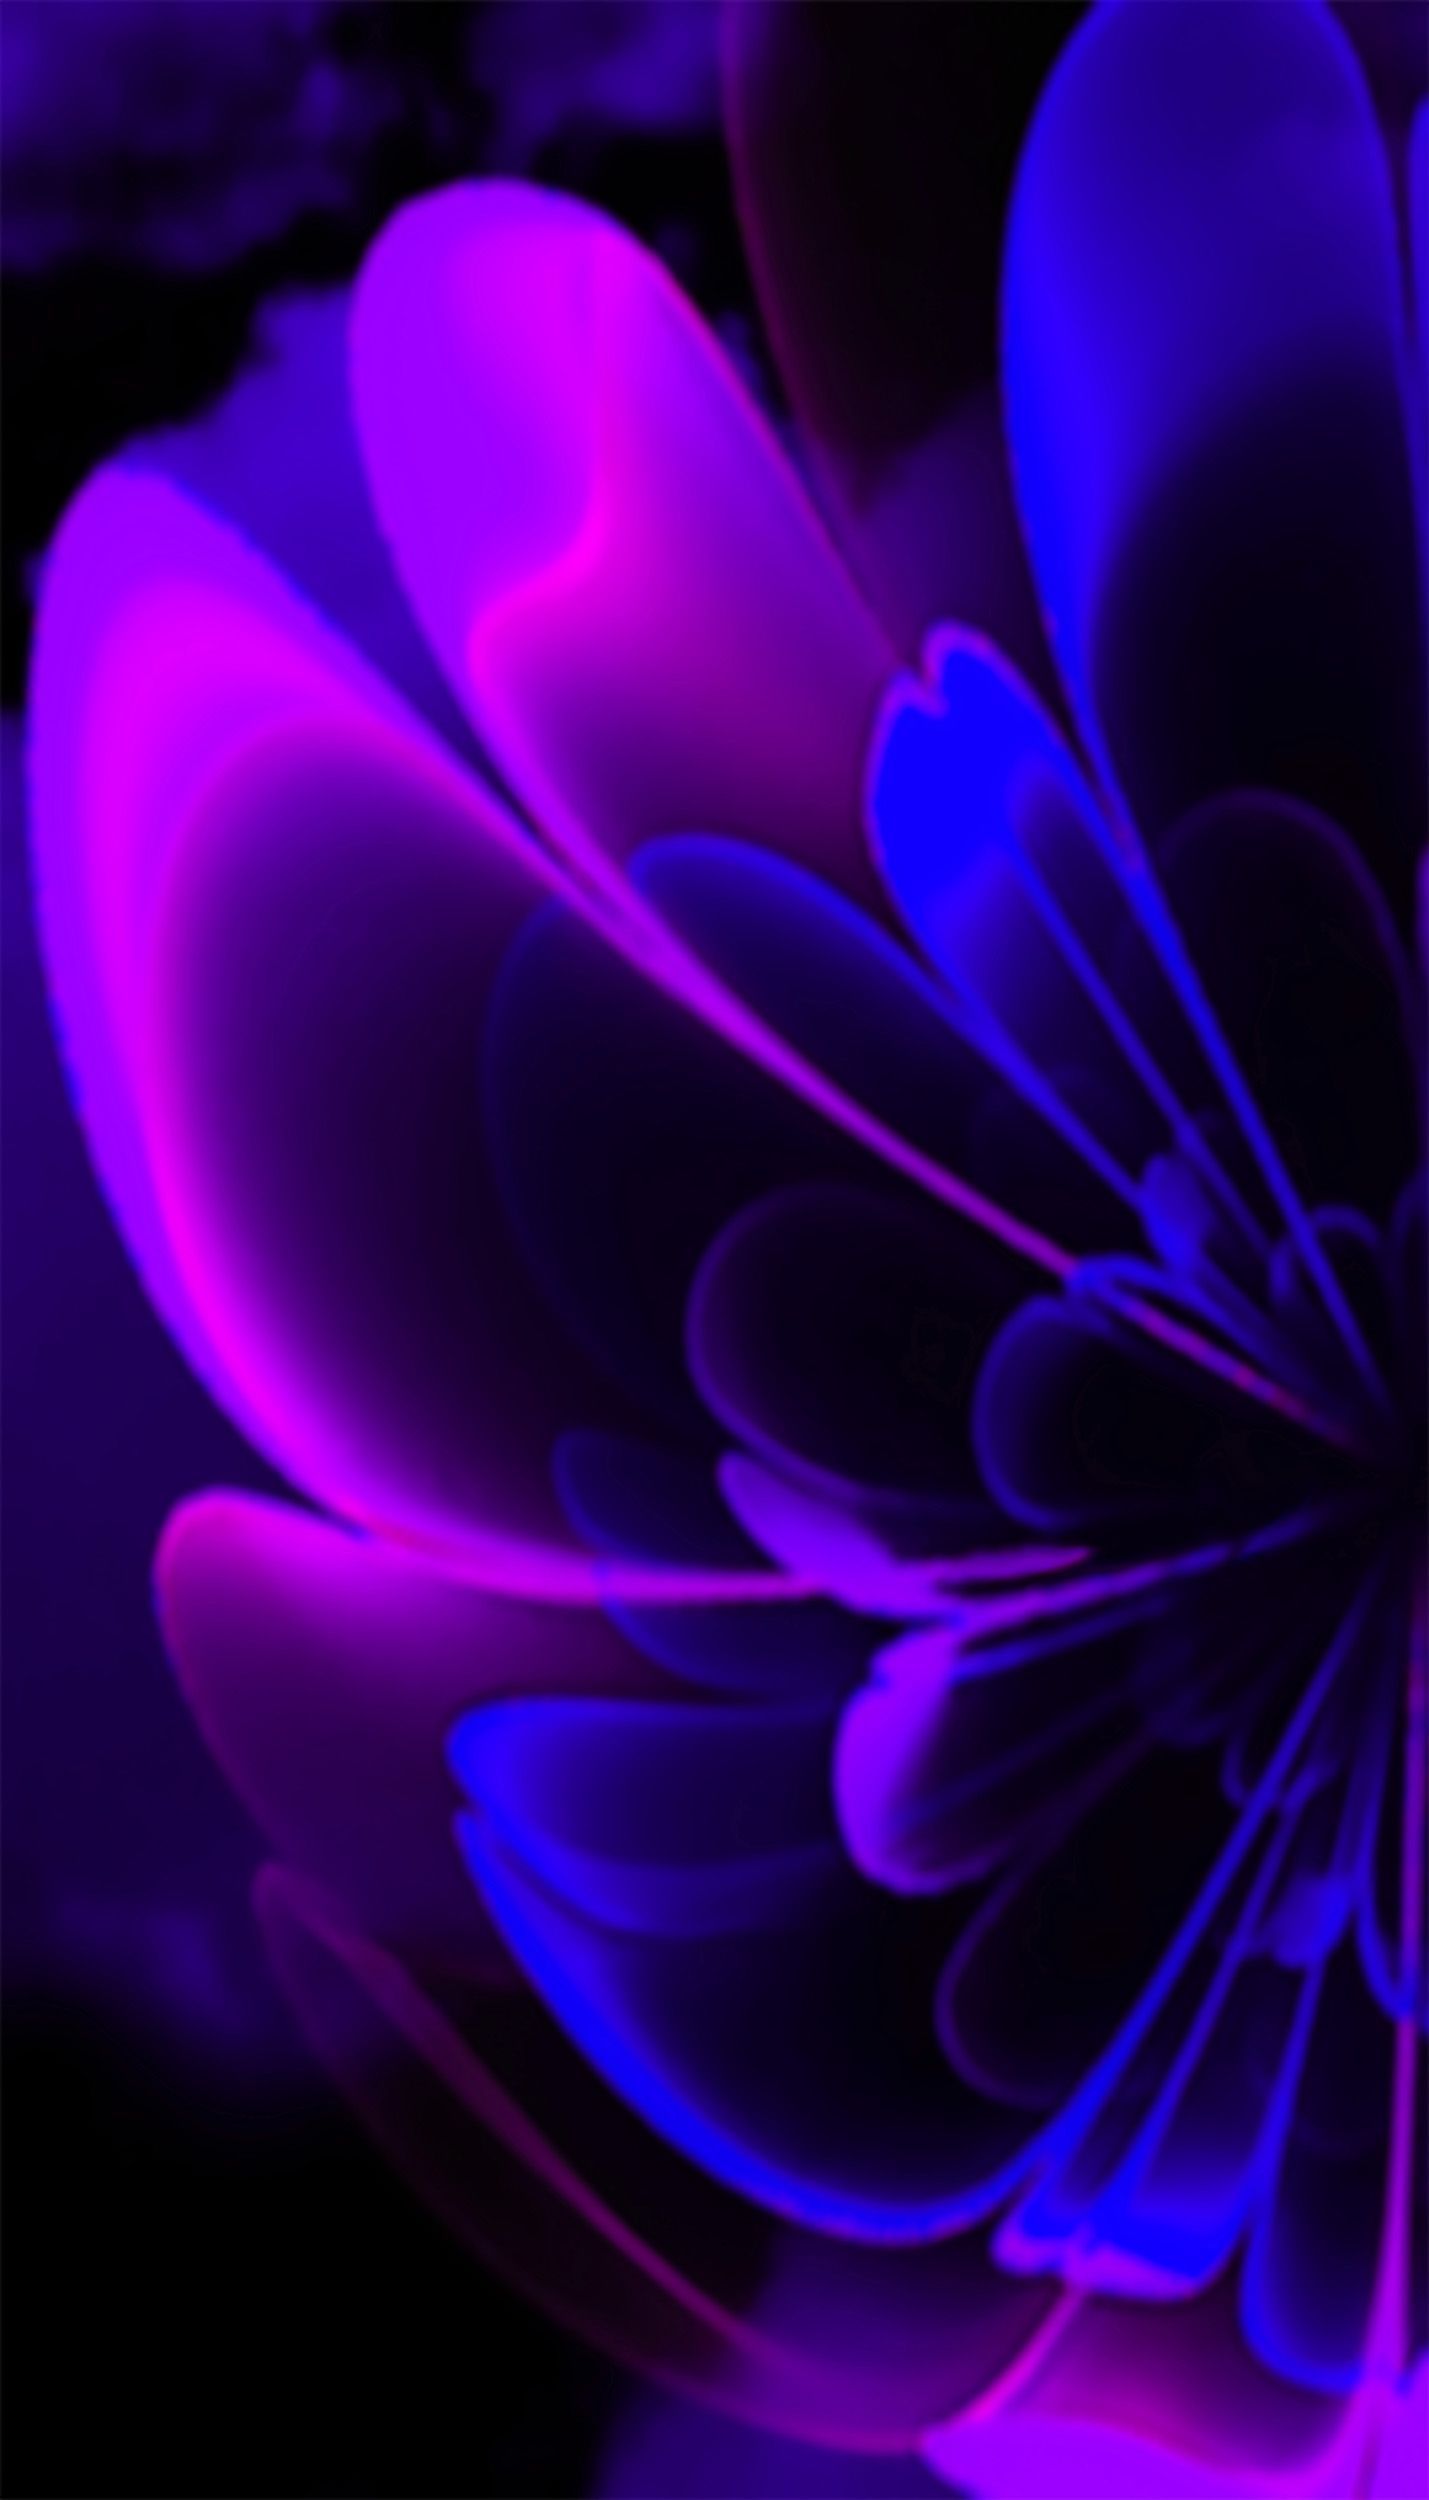 Wallpaper Background With Indigo And Purple Stylized Flower, Shyny Vivid Color, 1080*1920 9 1. Dark Purple Wallpaper, Art Aesthetic Wallpaper, Zentangle Artwork